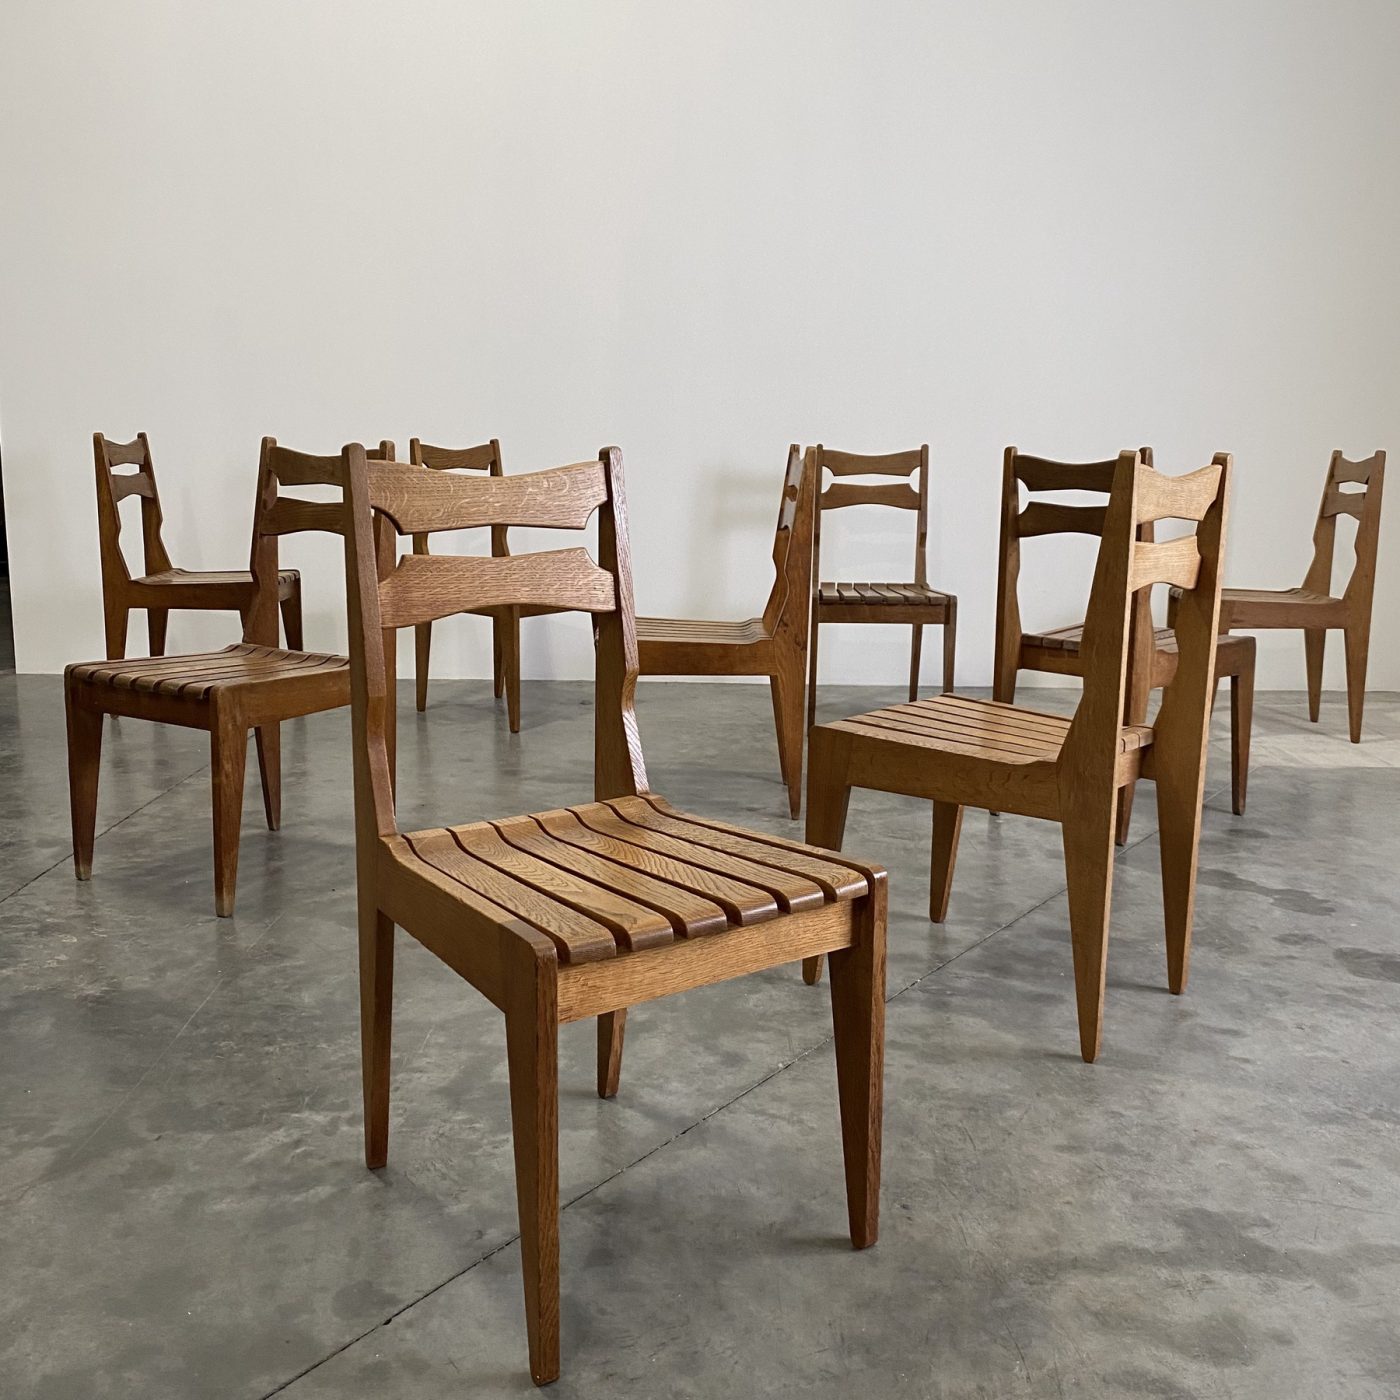 objet-vagabond-reconstruction-chairs0002